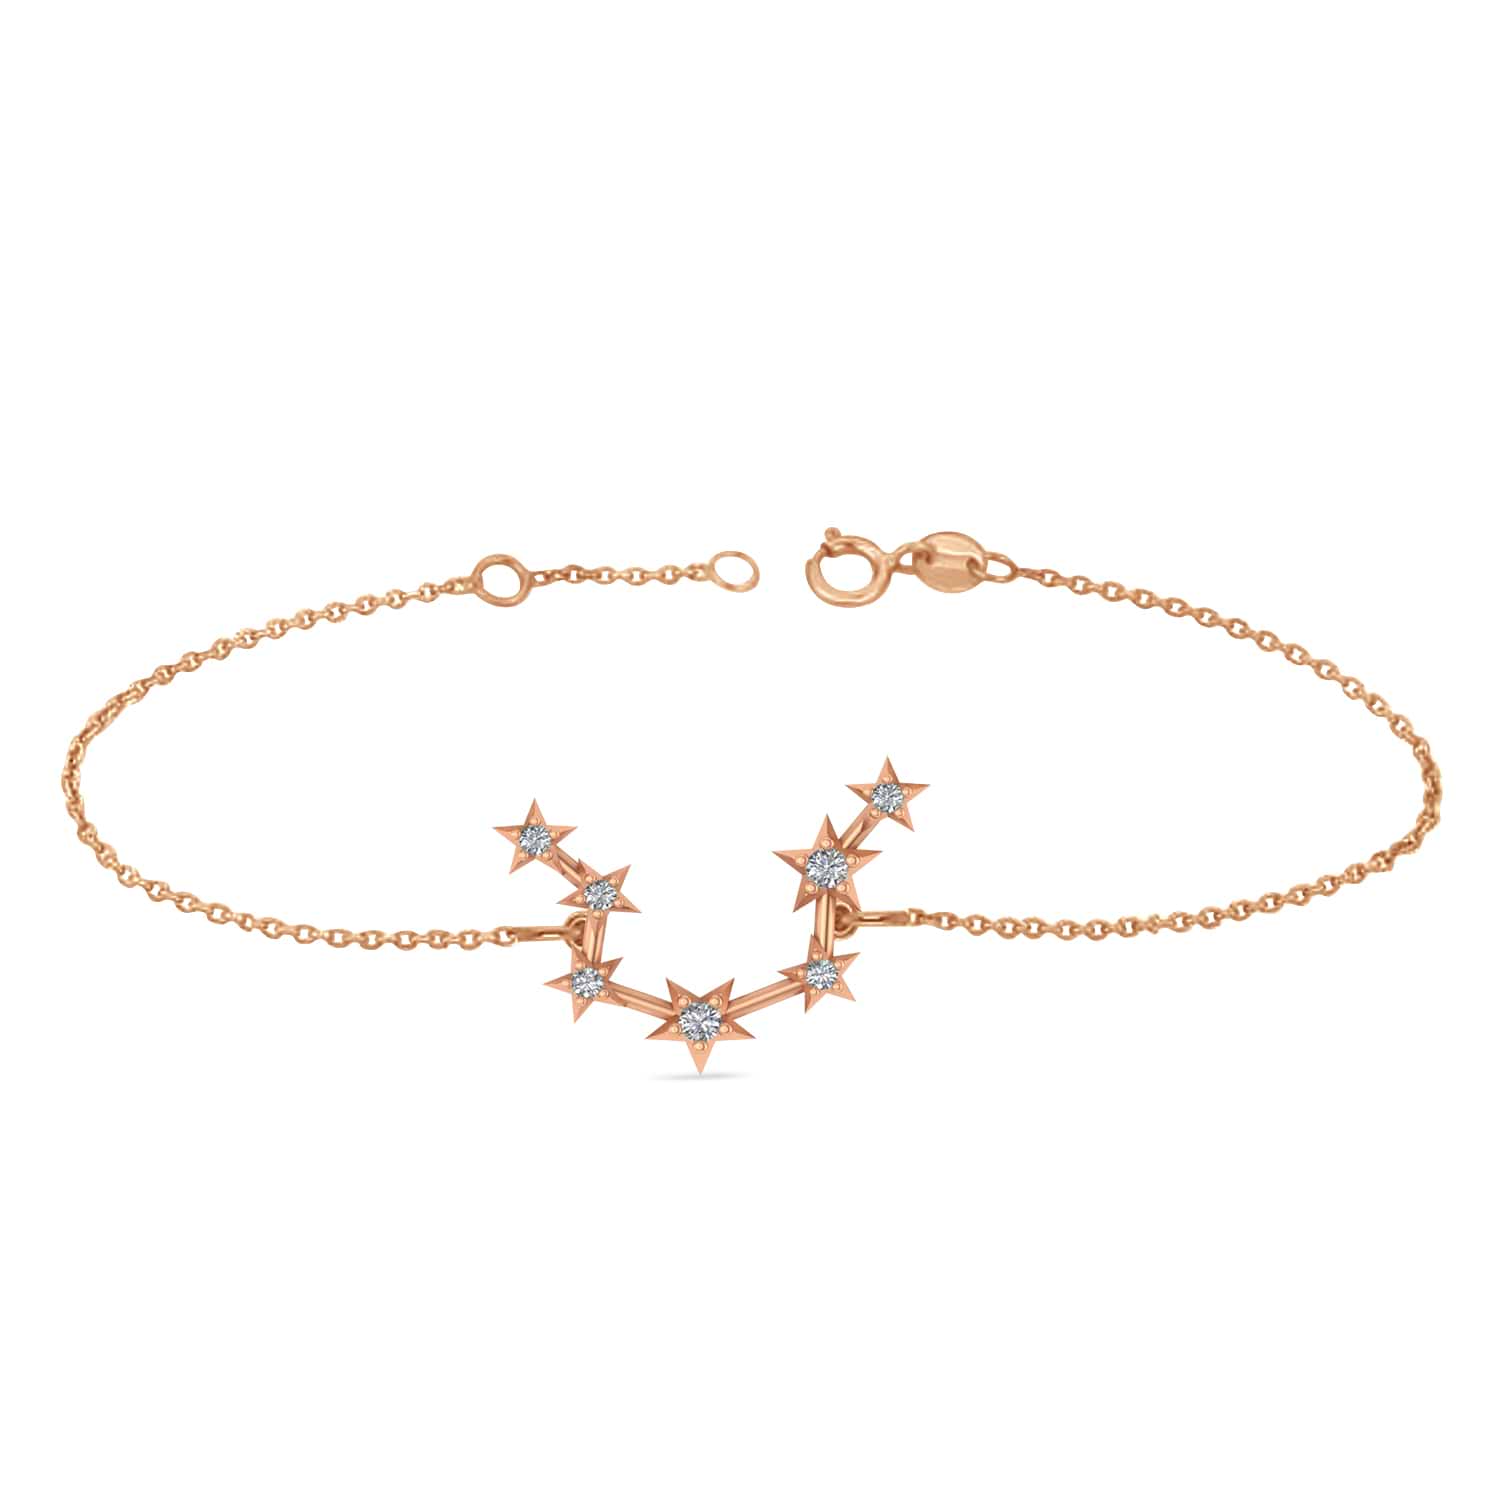 Diamond Aquarius Zodiac Constellation Star Bracelet 14k Rose Gold (0.9 ct)